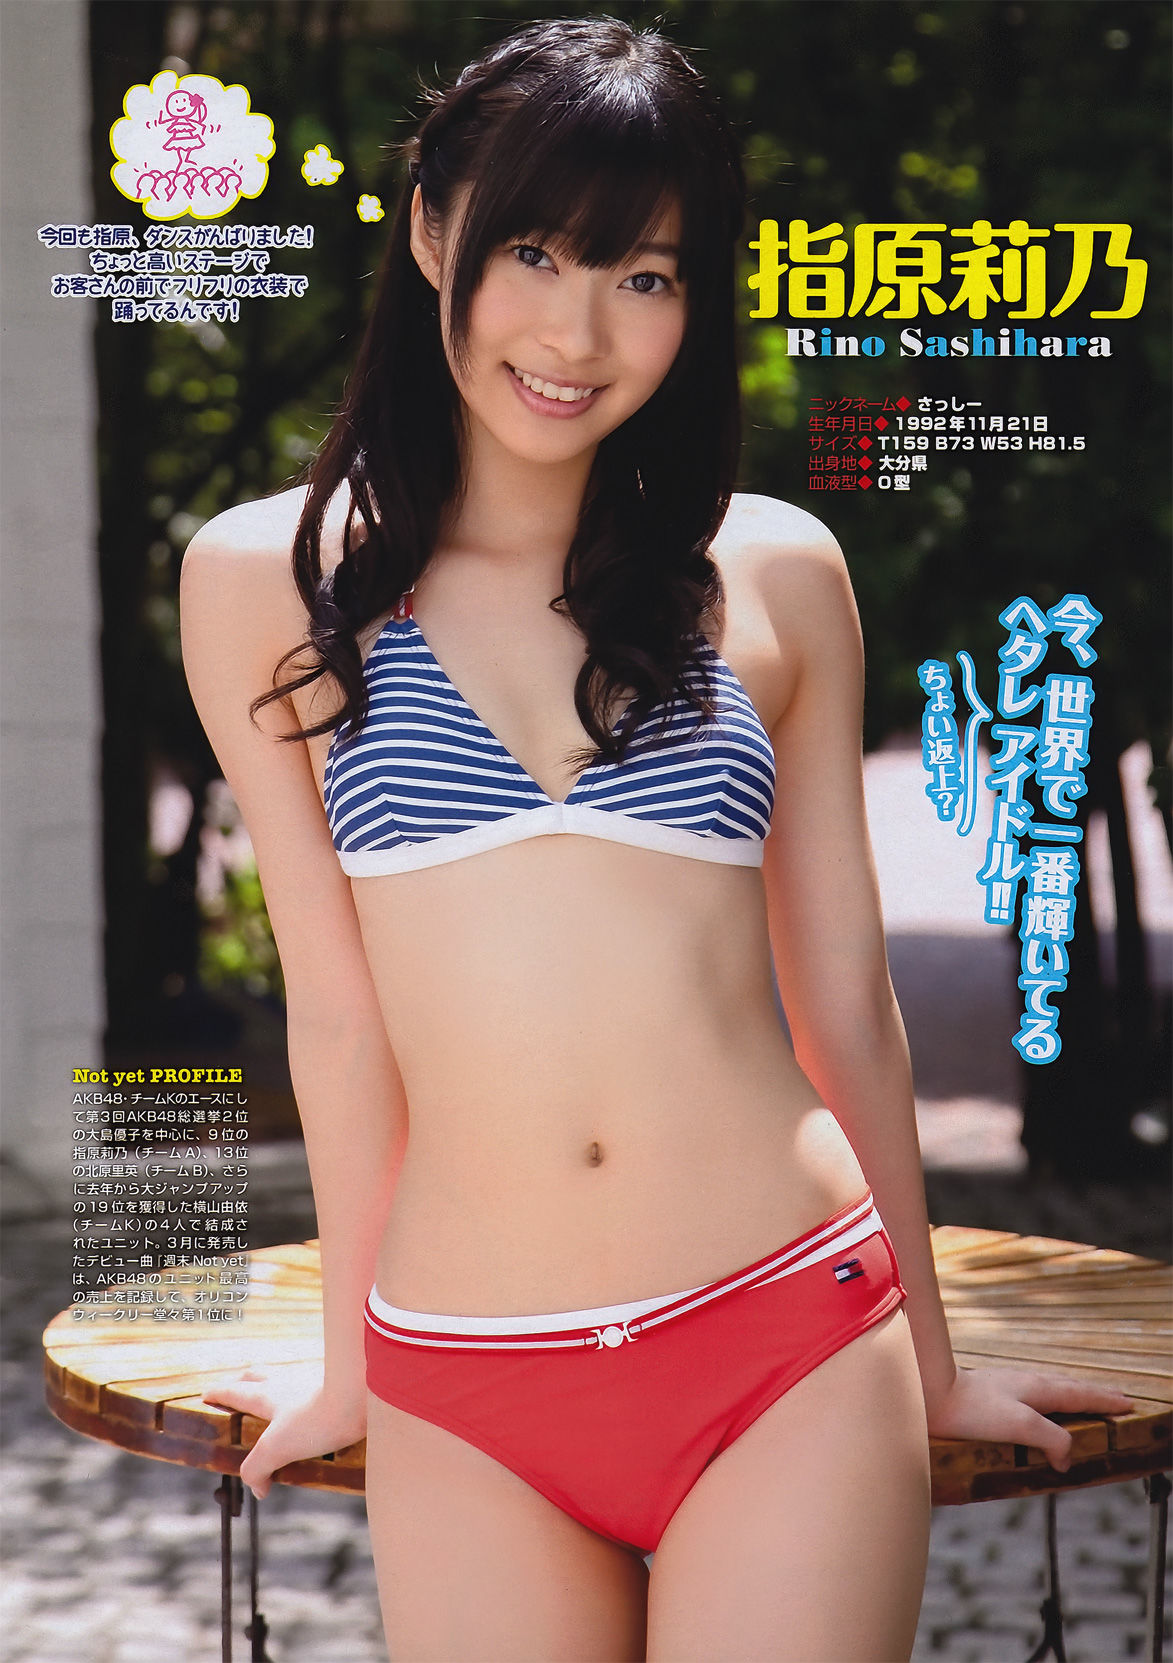 [Young Magazine]杂志:野津友那乃高品质写真作品个人分享(18P)